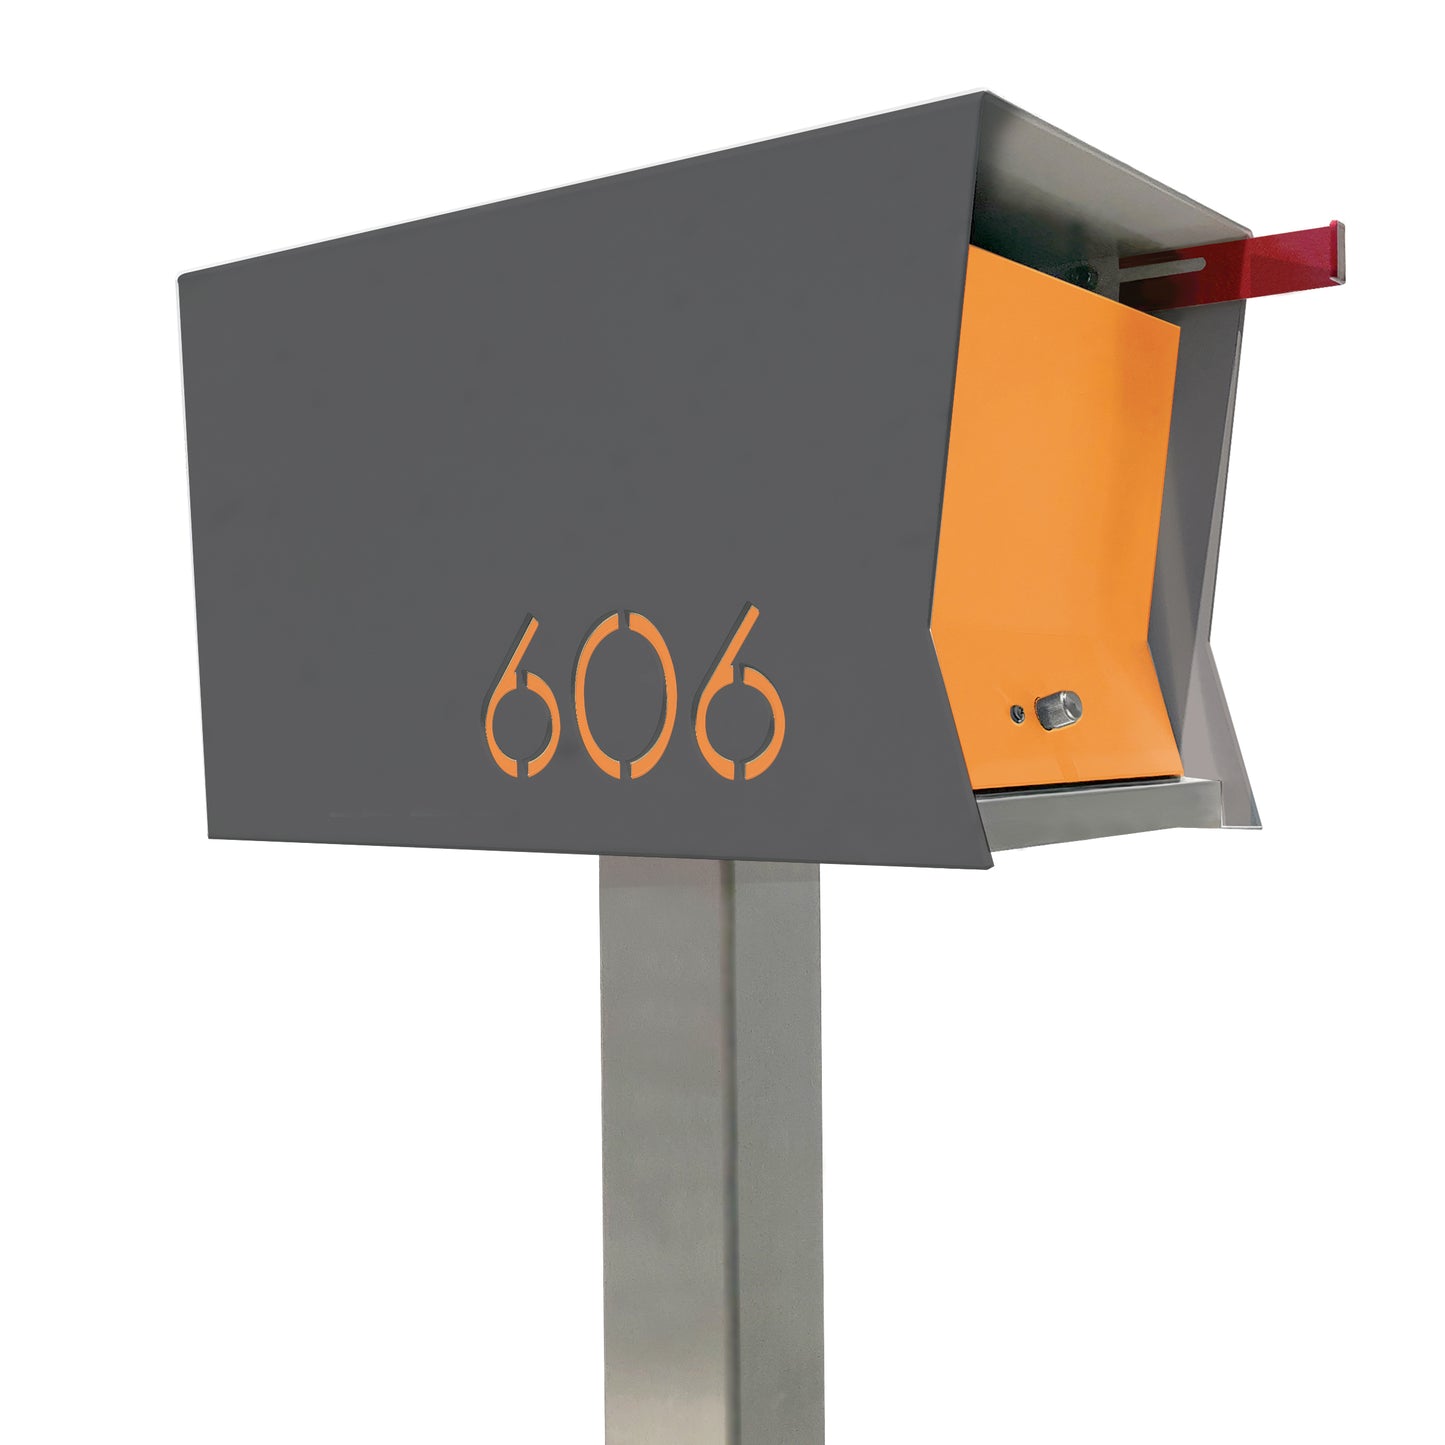 The Original Retrobox in DESIGNER GRAY - Modern Mailbox grey and orange